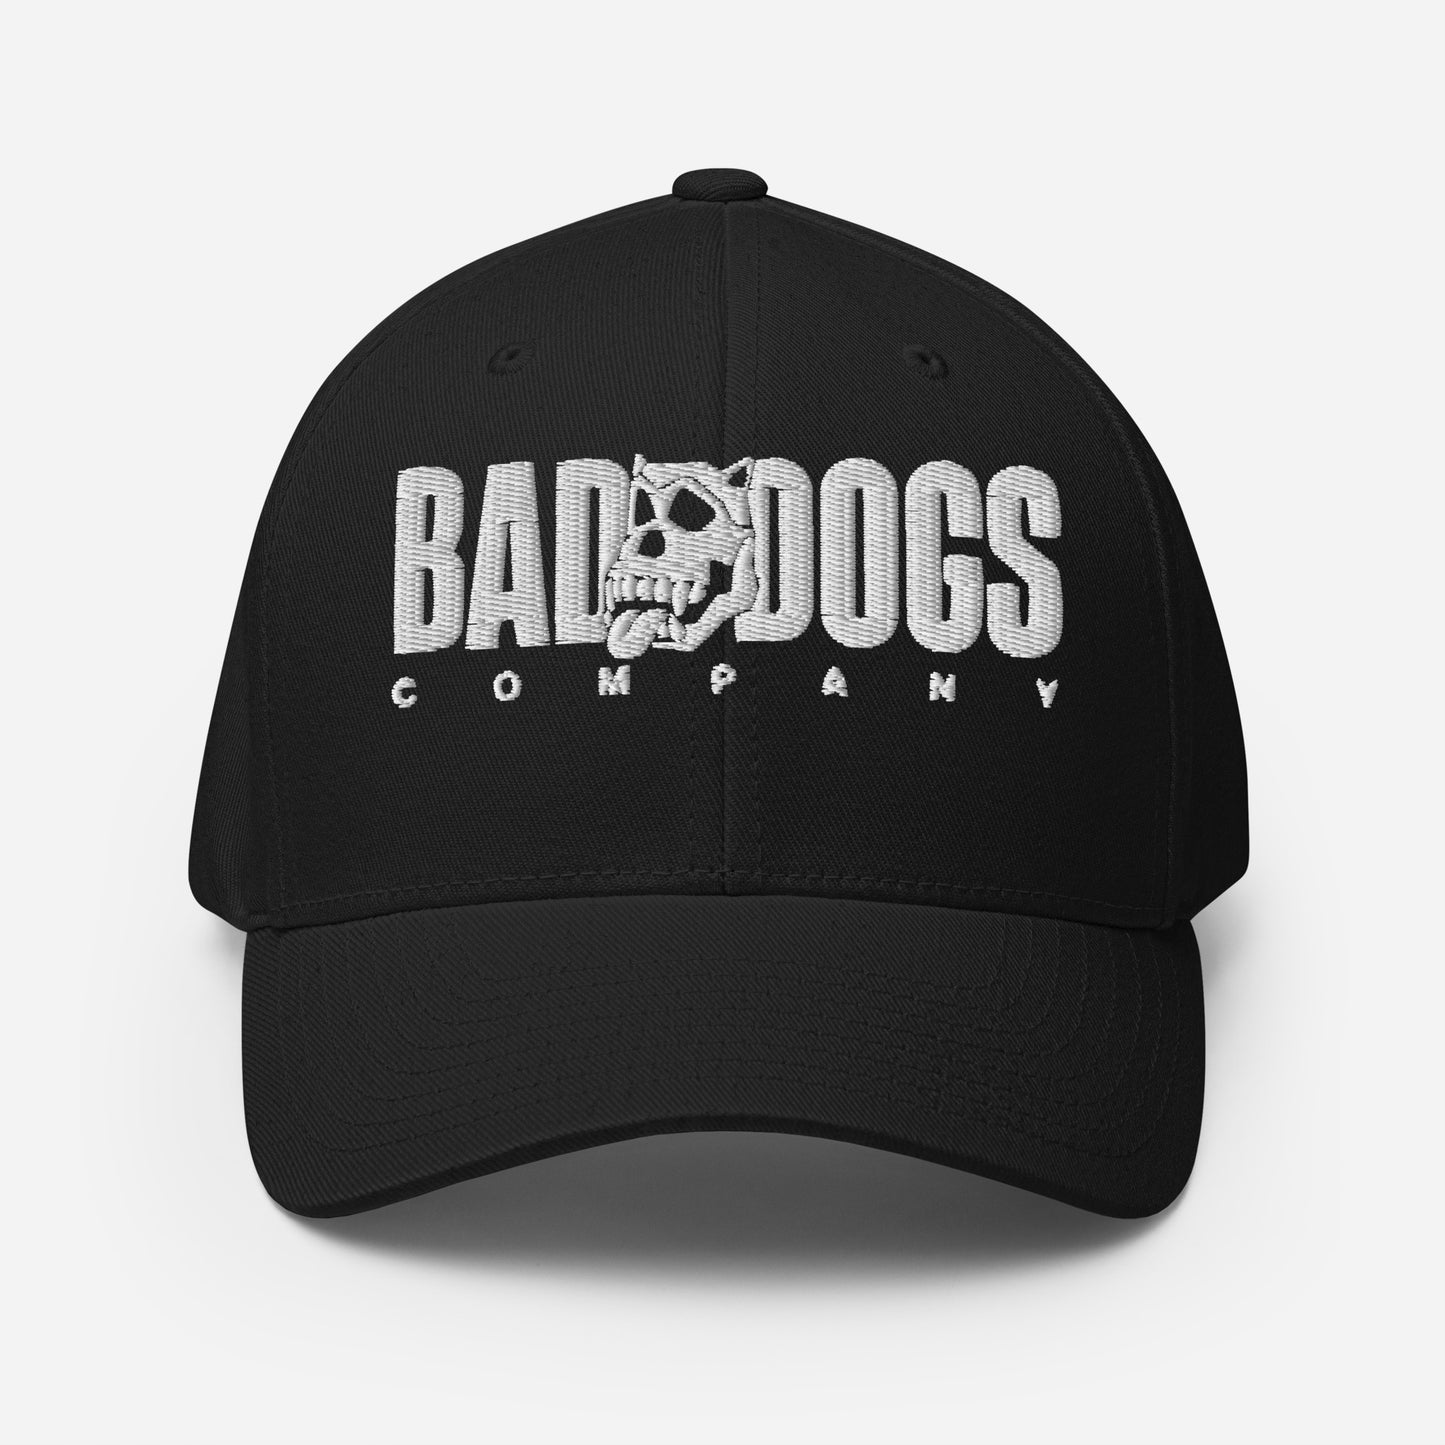 Bad Dogs FlexFit Baseball Cap (Black - White logo)